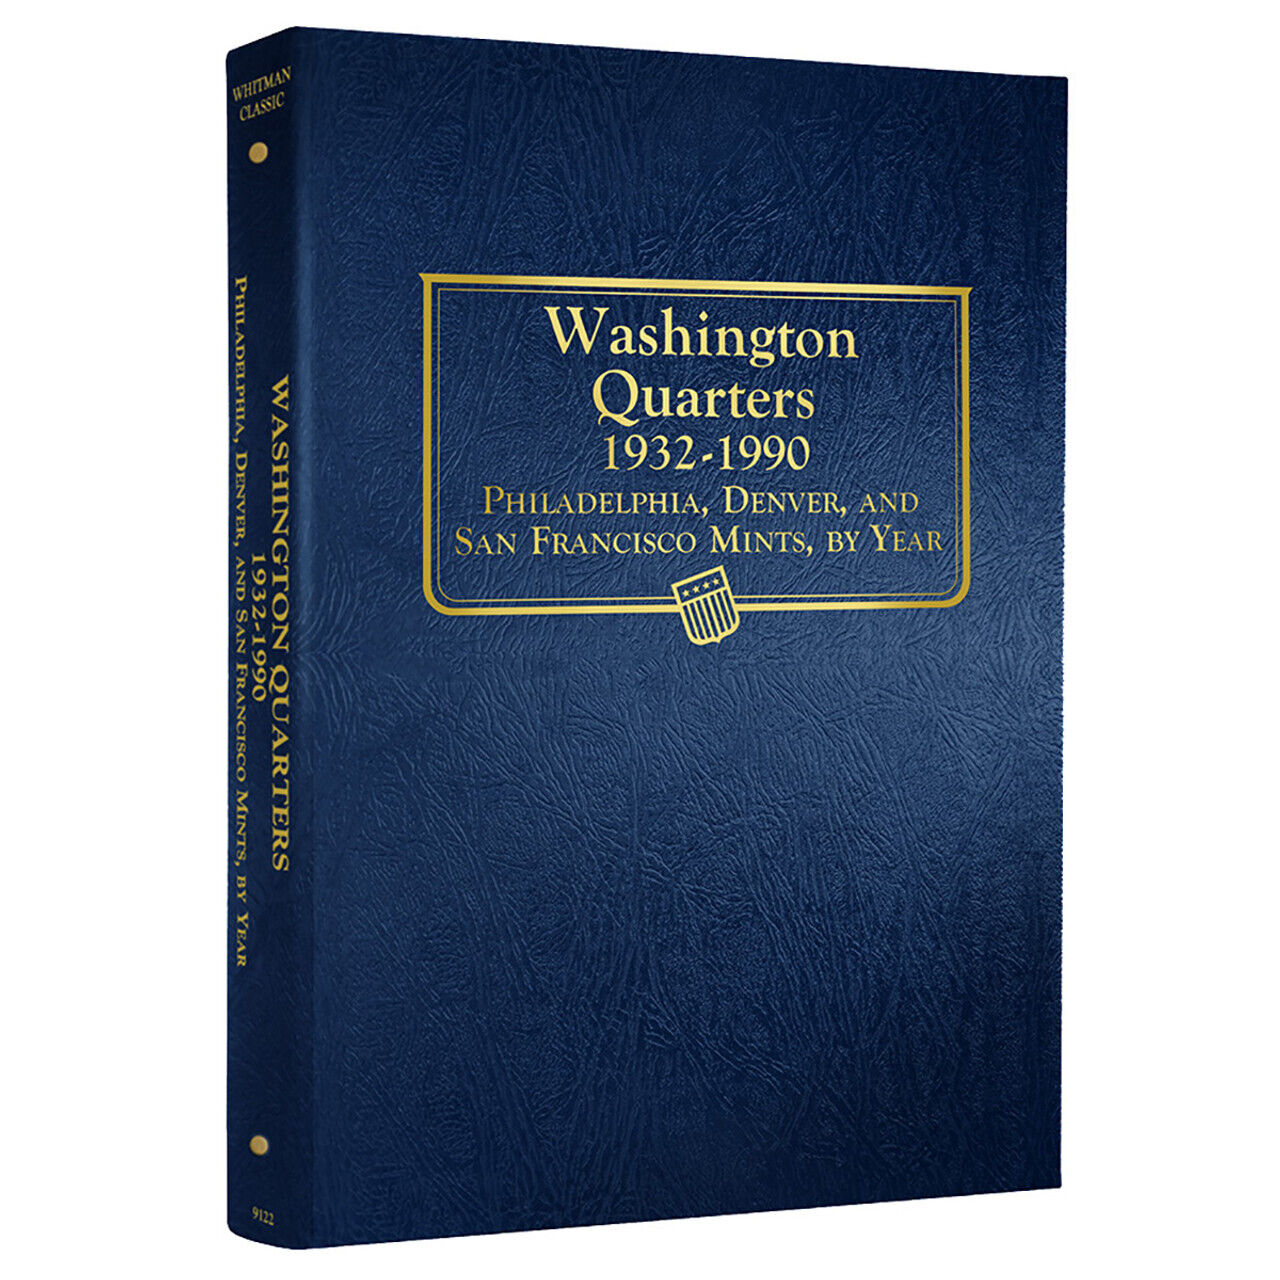 U.S. Washington Quarters: 1932-1990 - Whitman Classic Coin Album